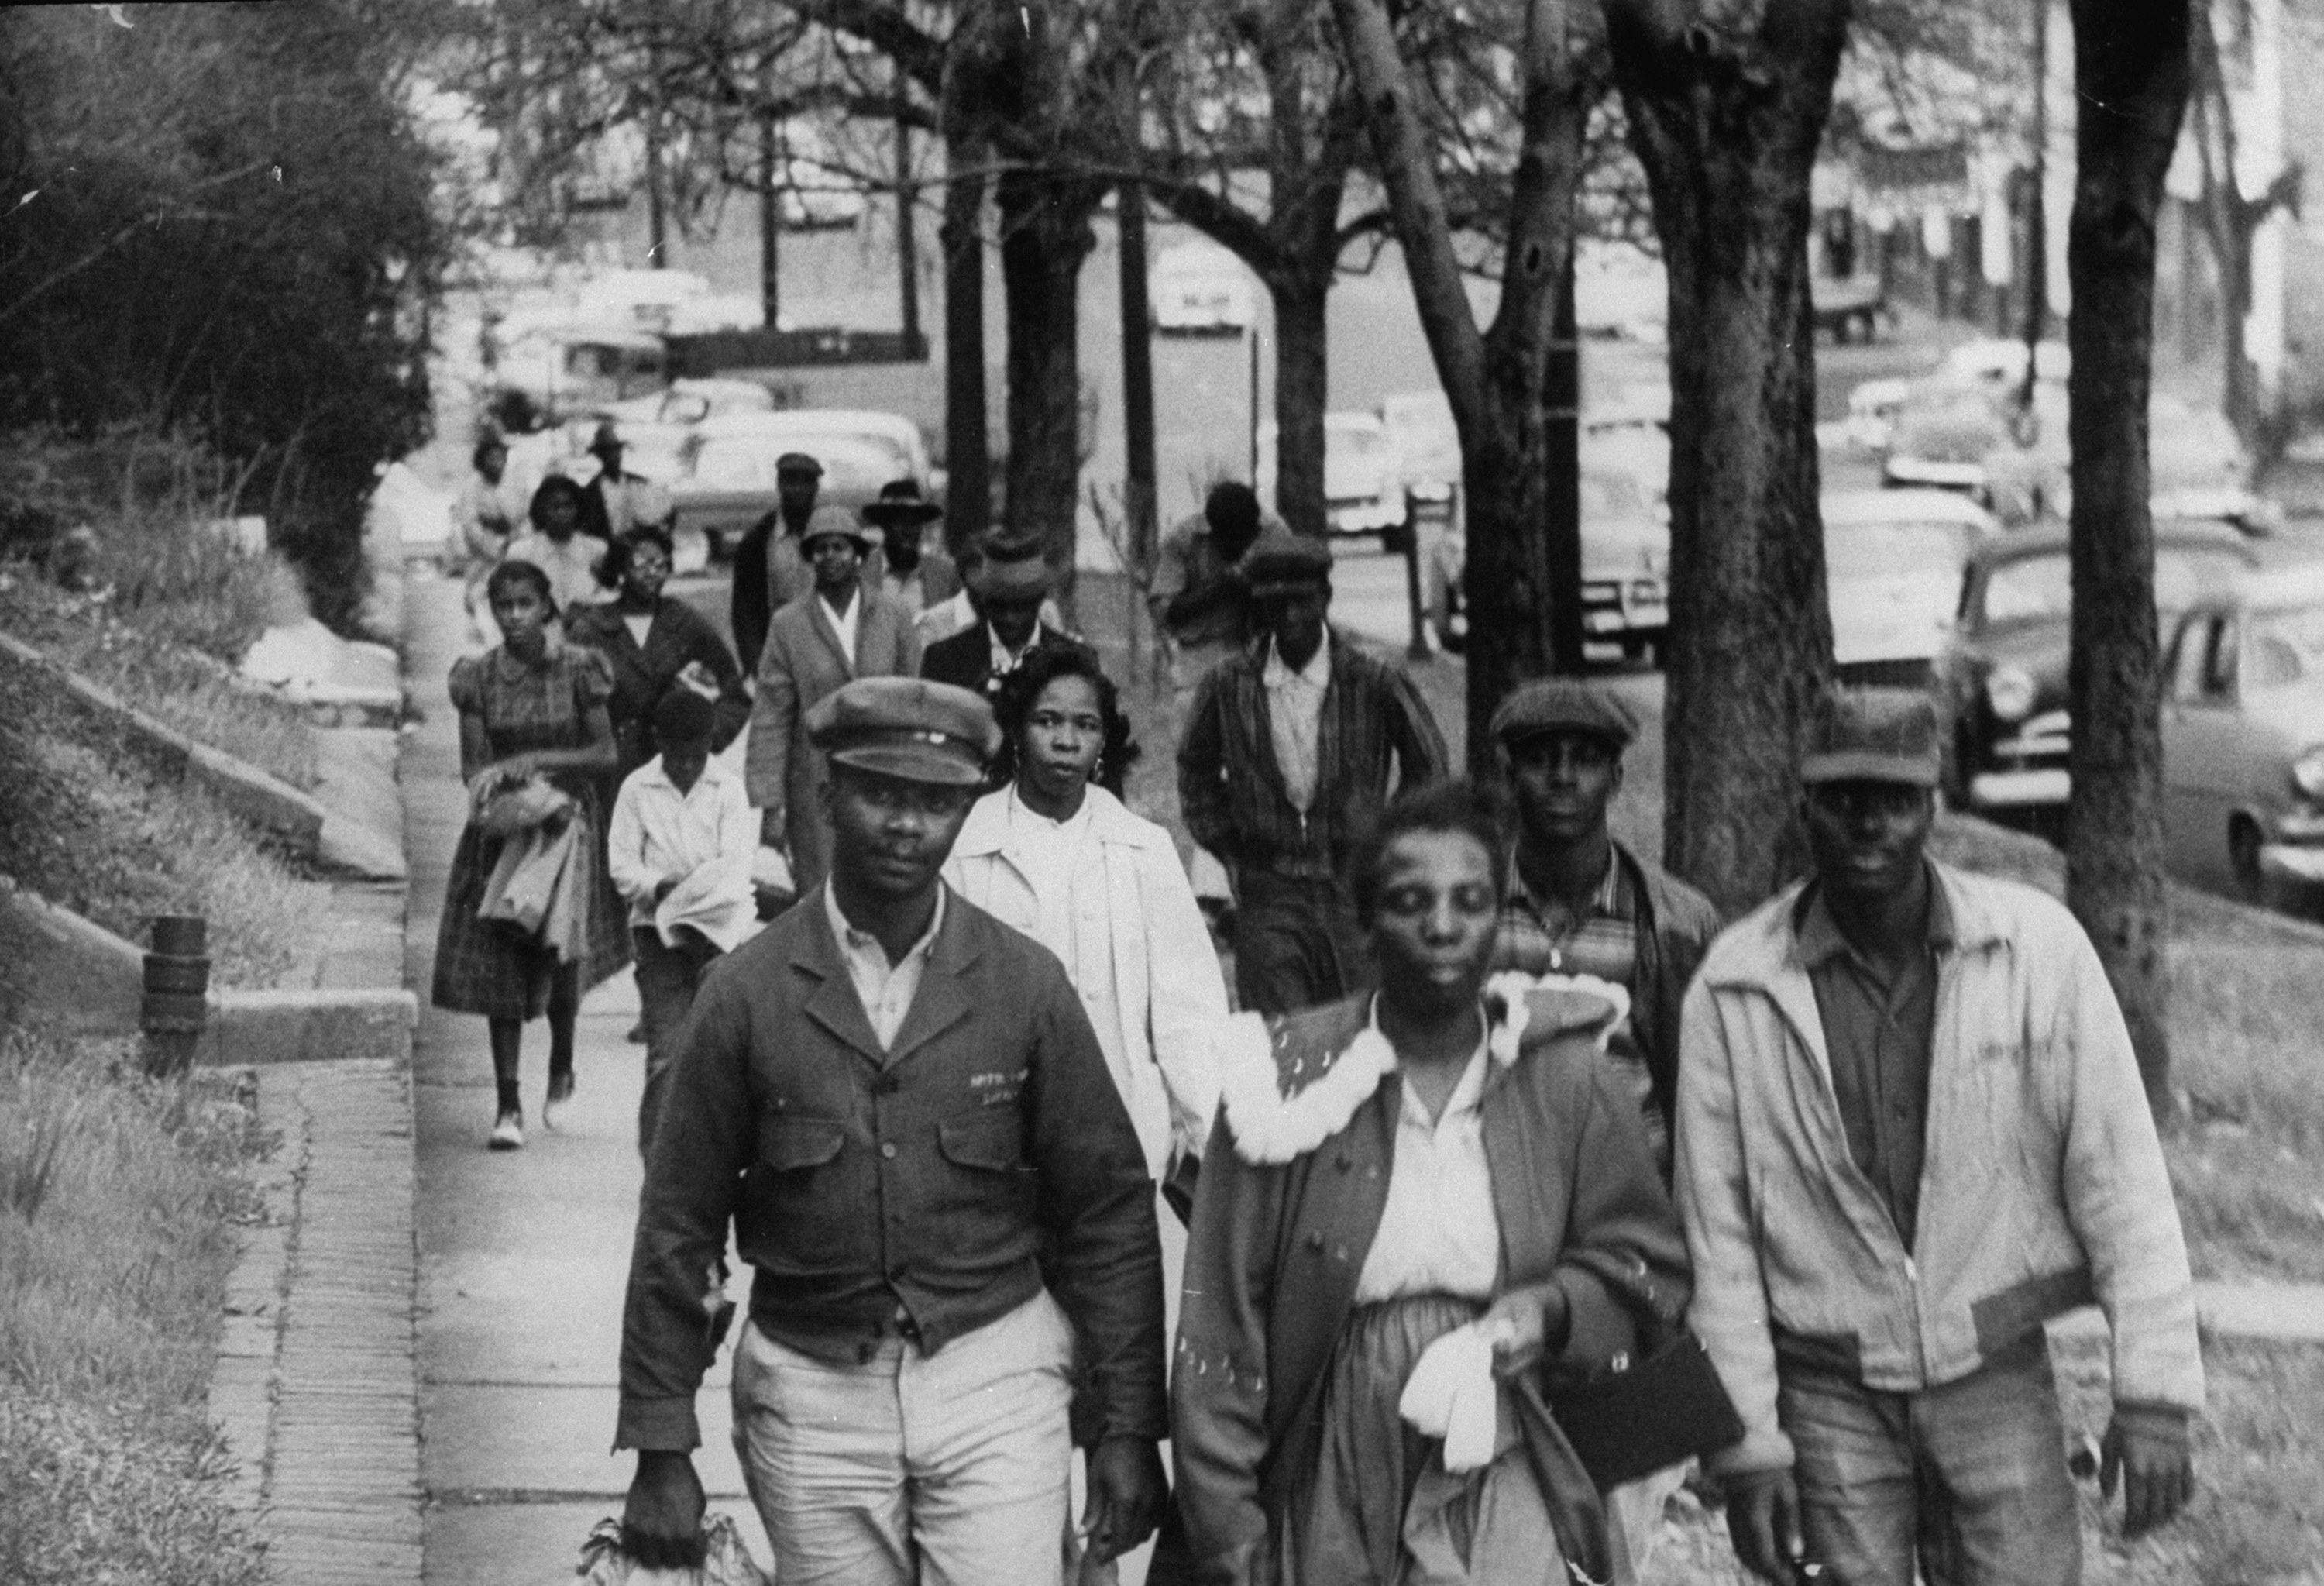 Blacks boycotting segregation